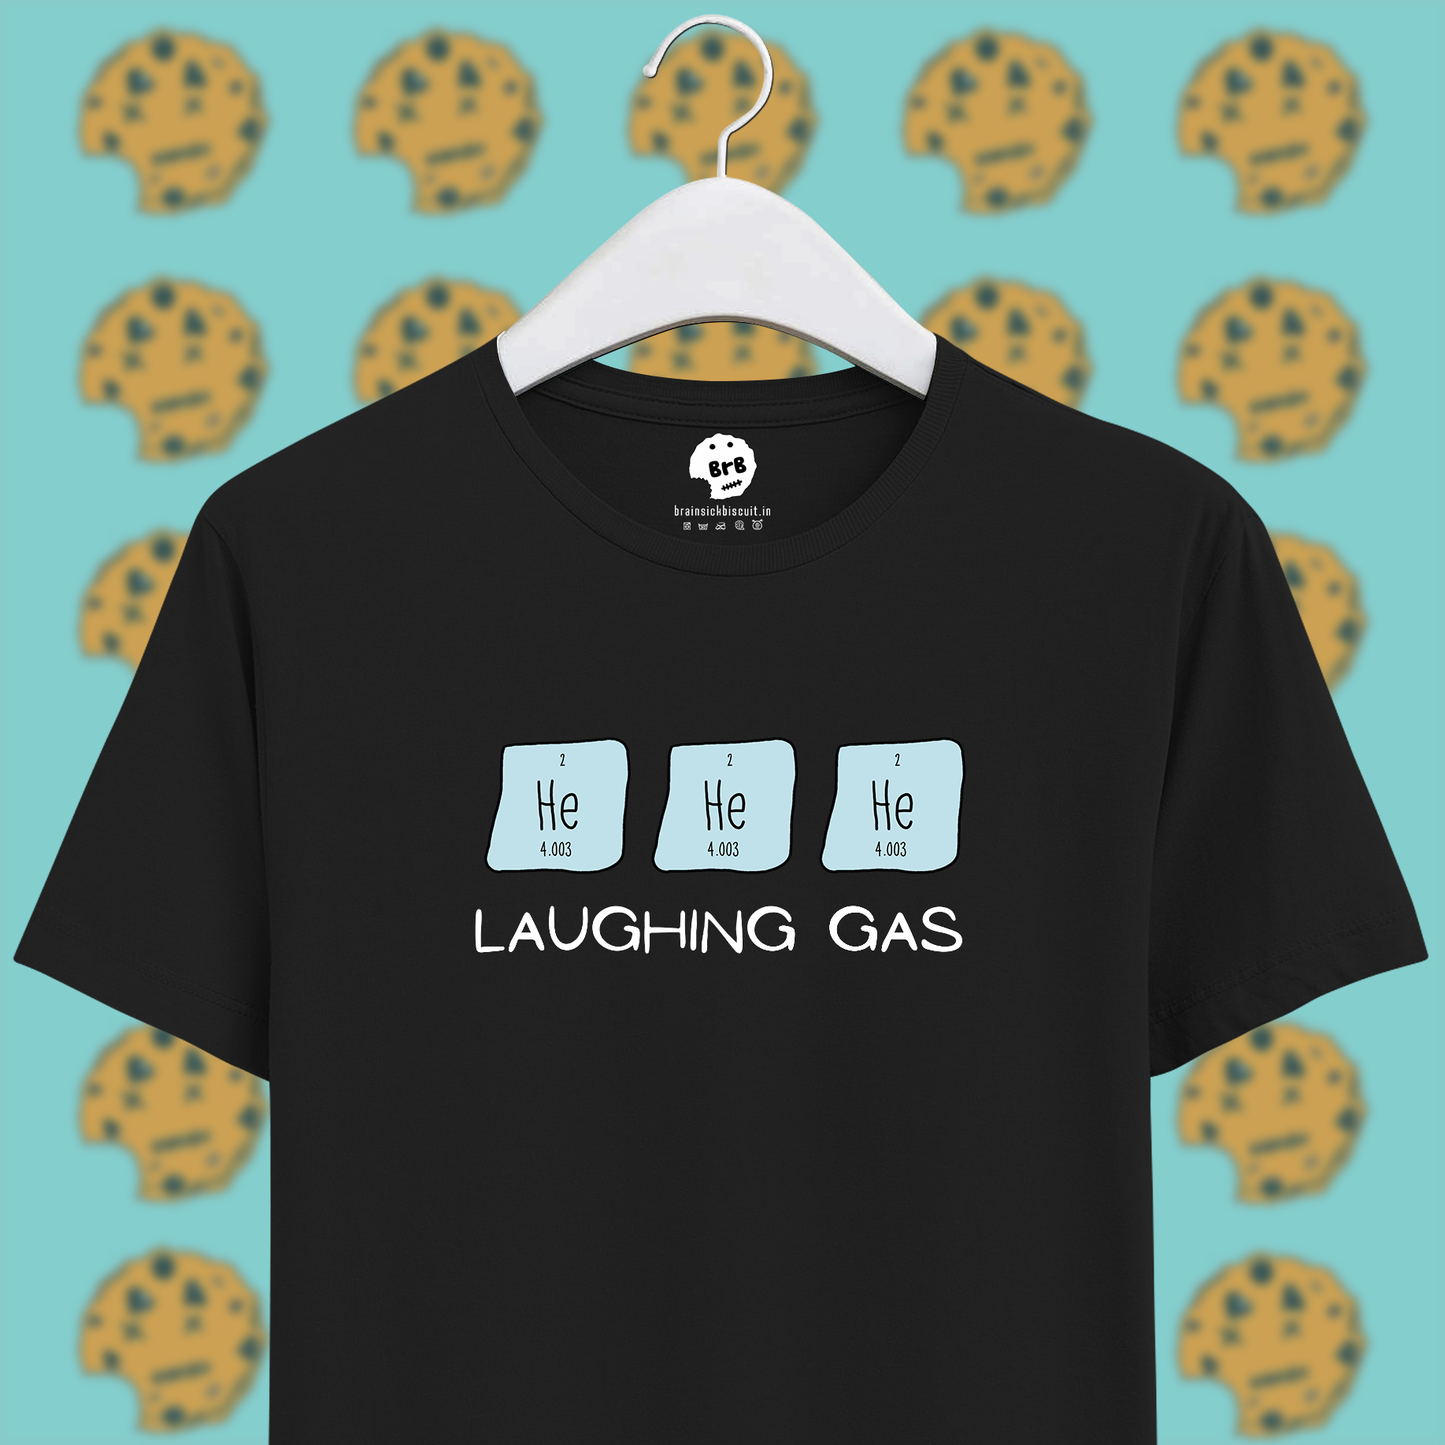 Laughing gas helium joke pun on black unisex half sleeves unisex cotton t-shirt.